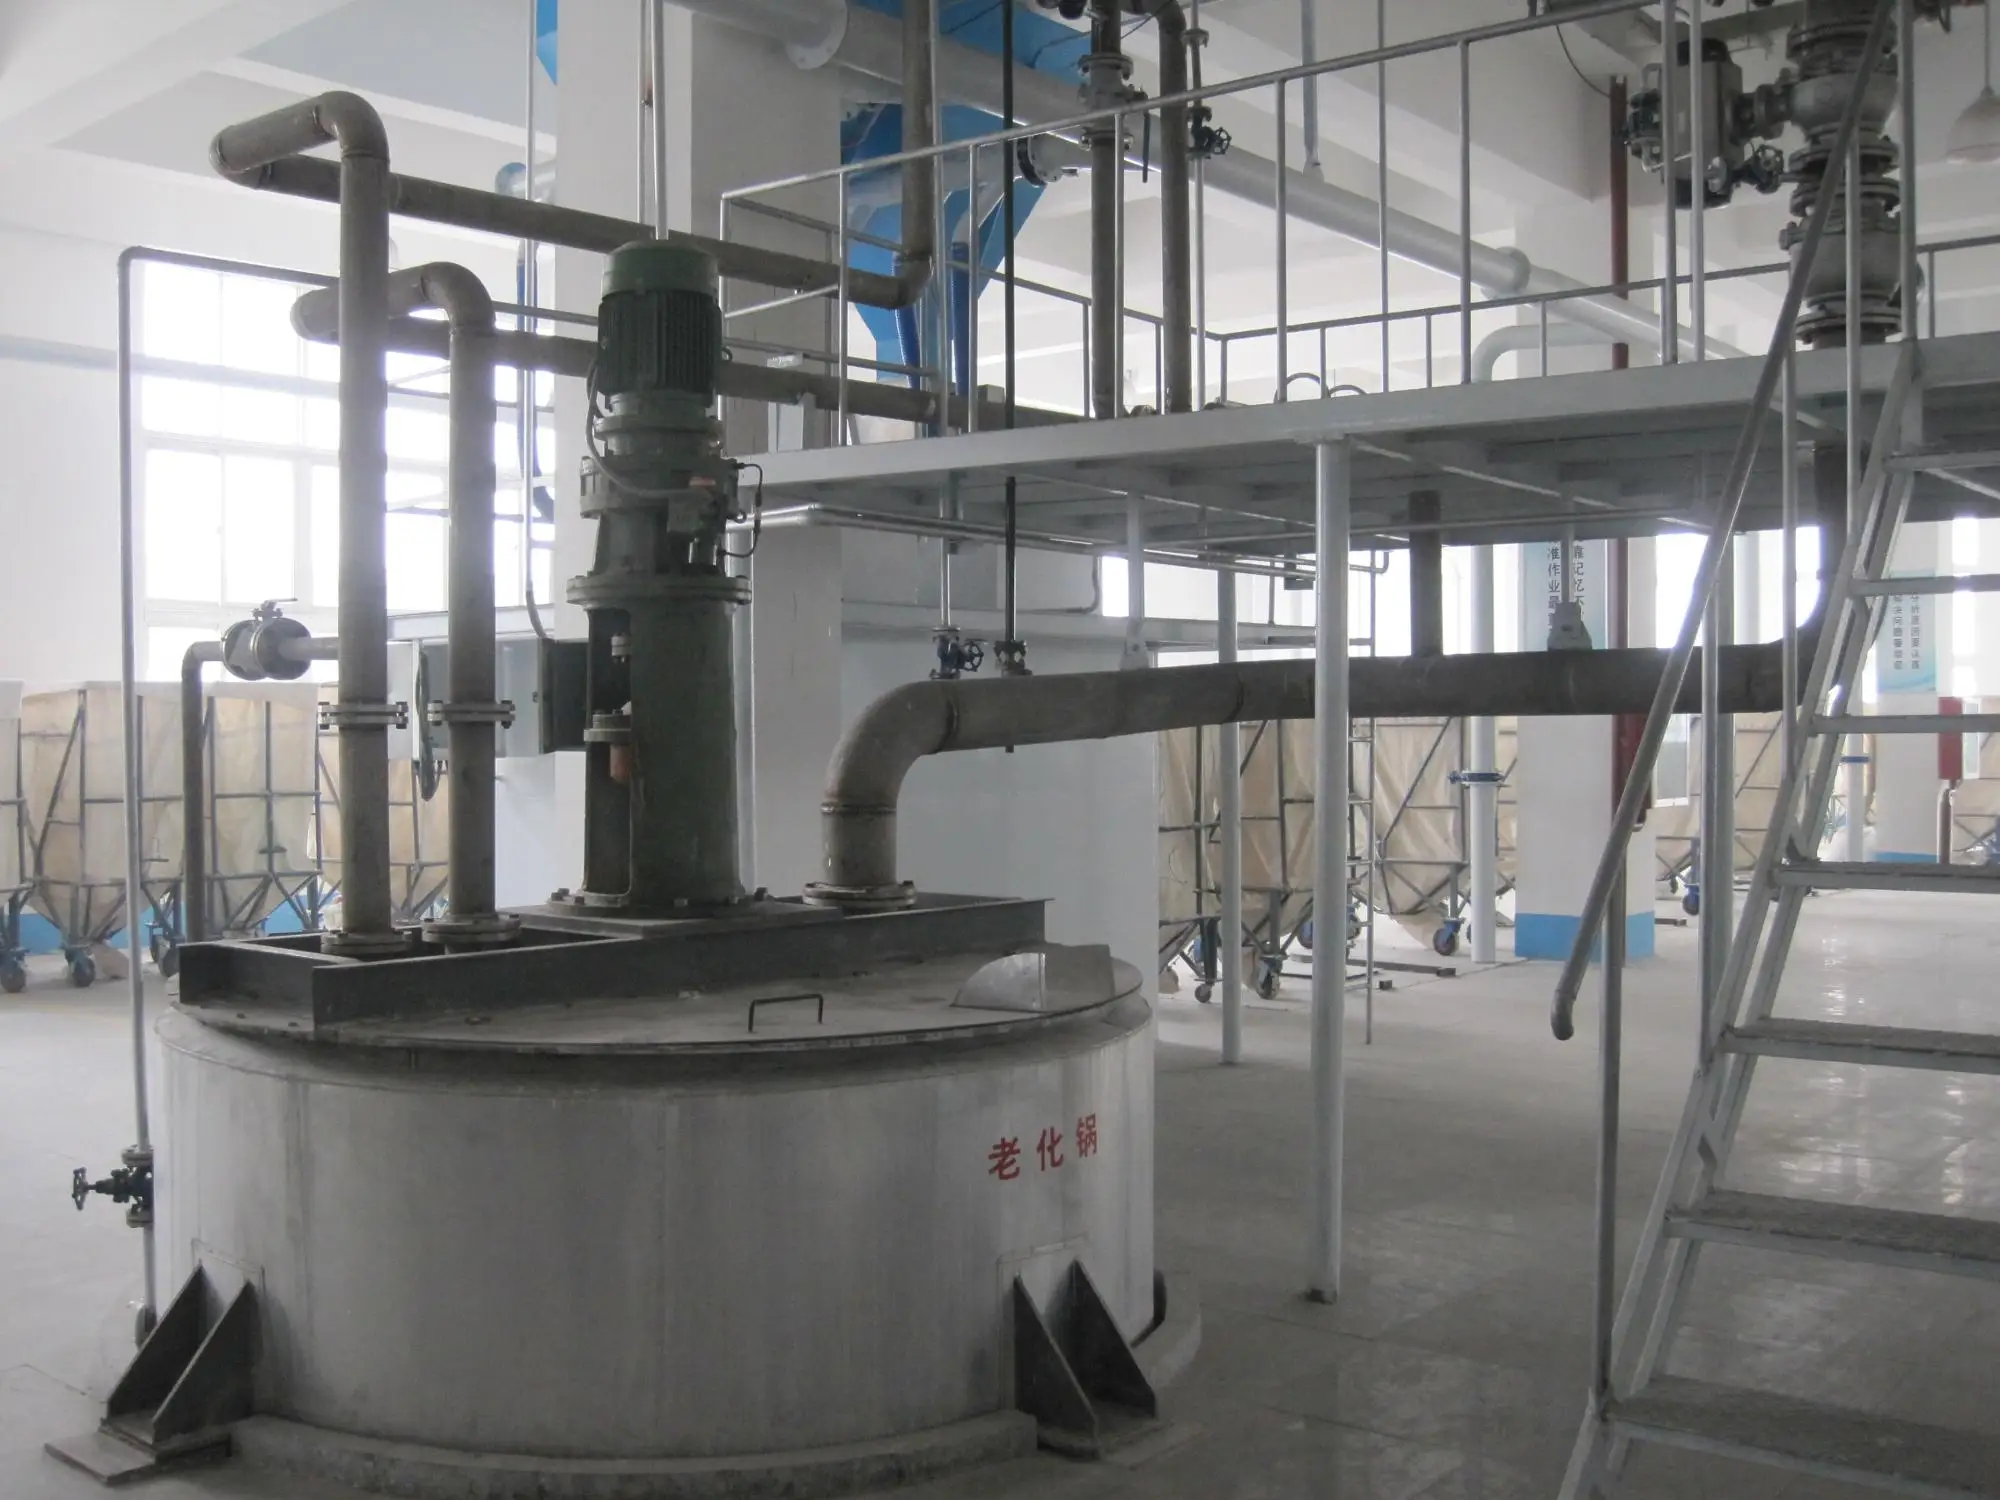 Detergent Powder Production Equipment / Spray Tower Washing Powder Production Equipment / Detergents Plant